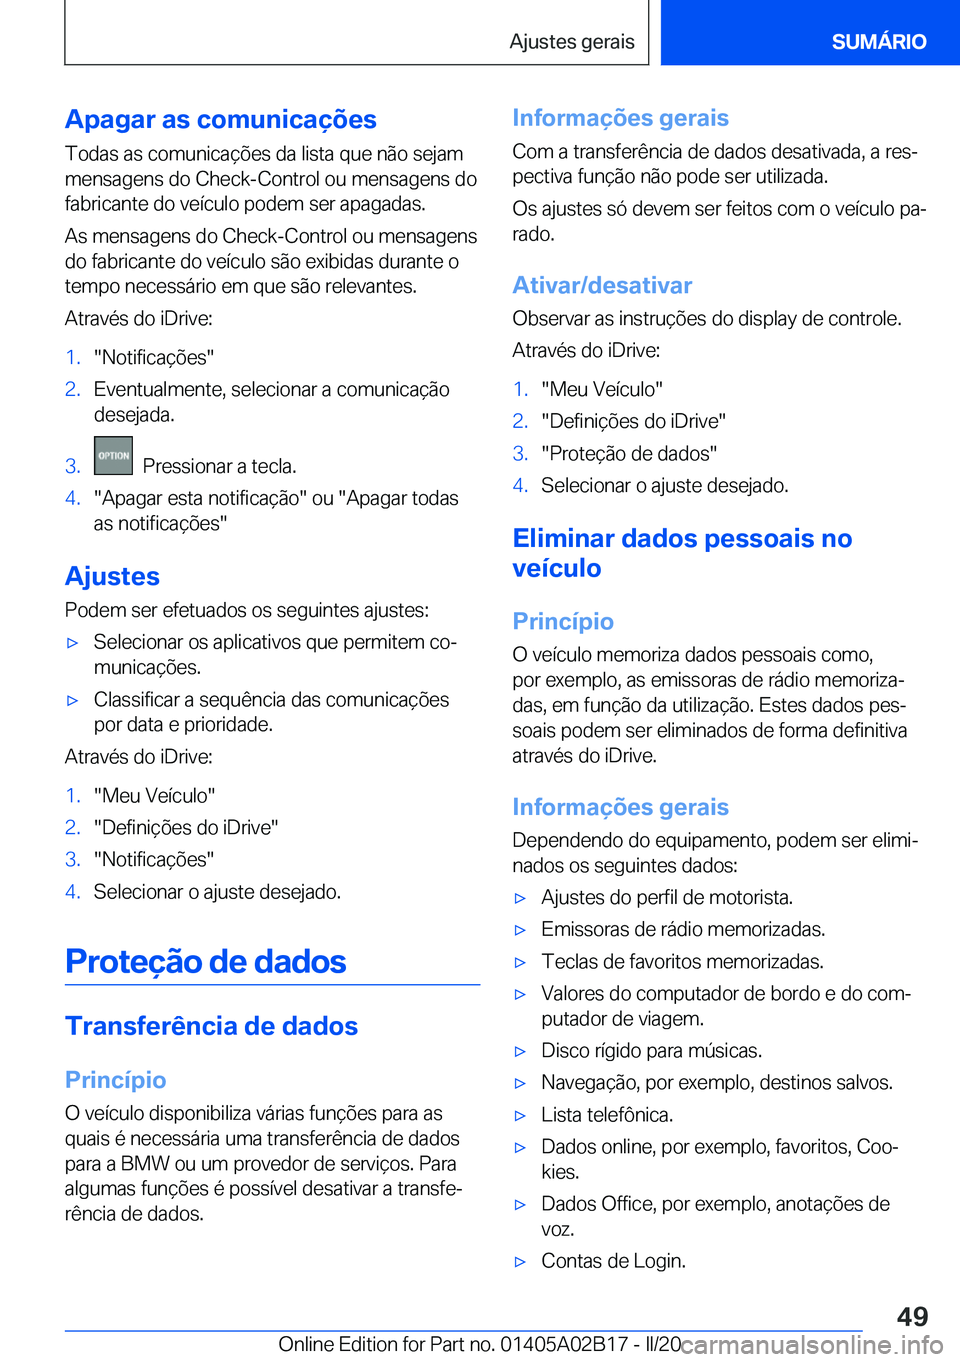 BMW X1 2020  Manual do condutor (in Portuguese) �A�p�a�g�a�r��a�s��c�o�m�u�n�i�c�a�